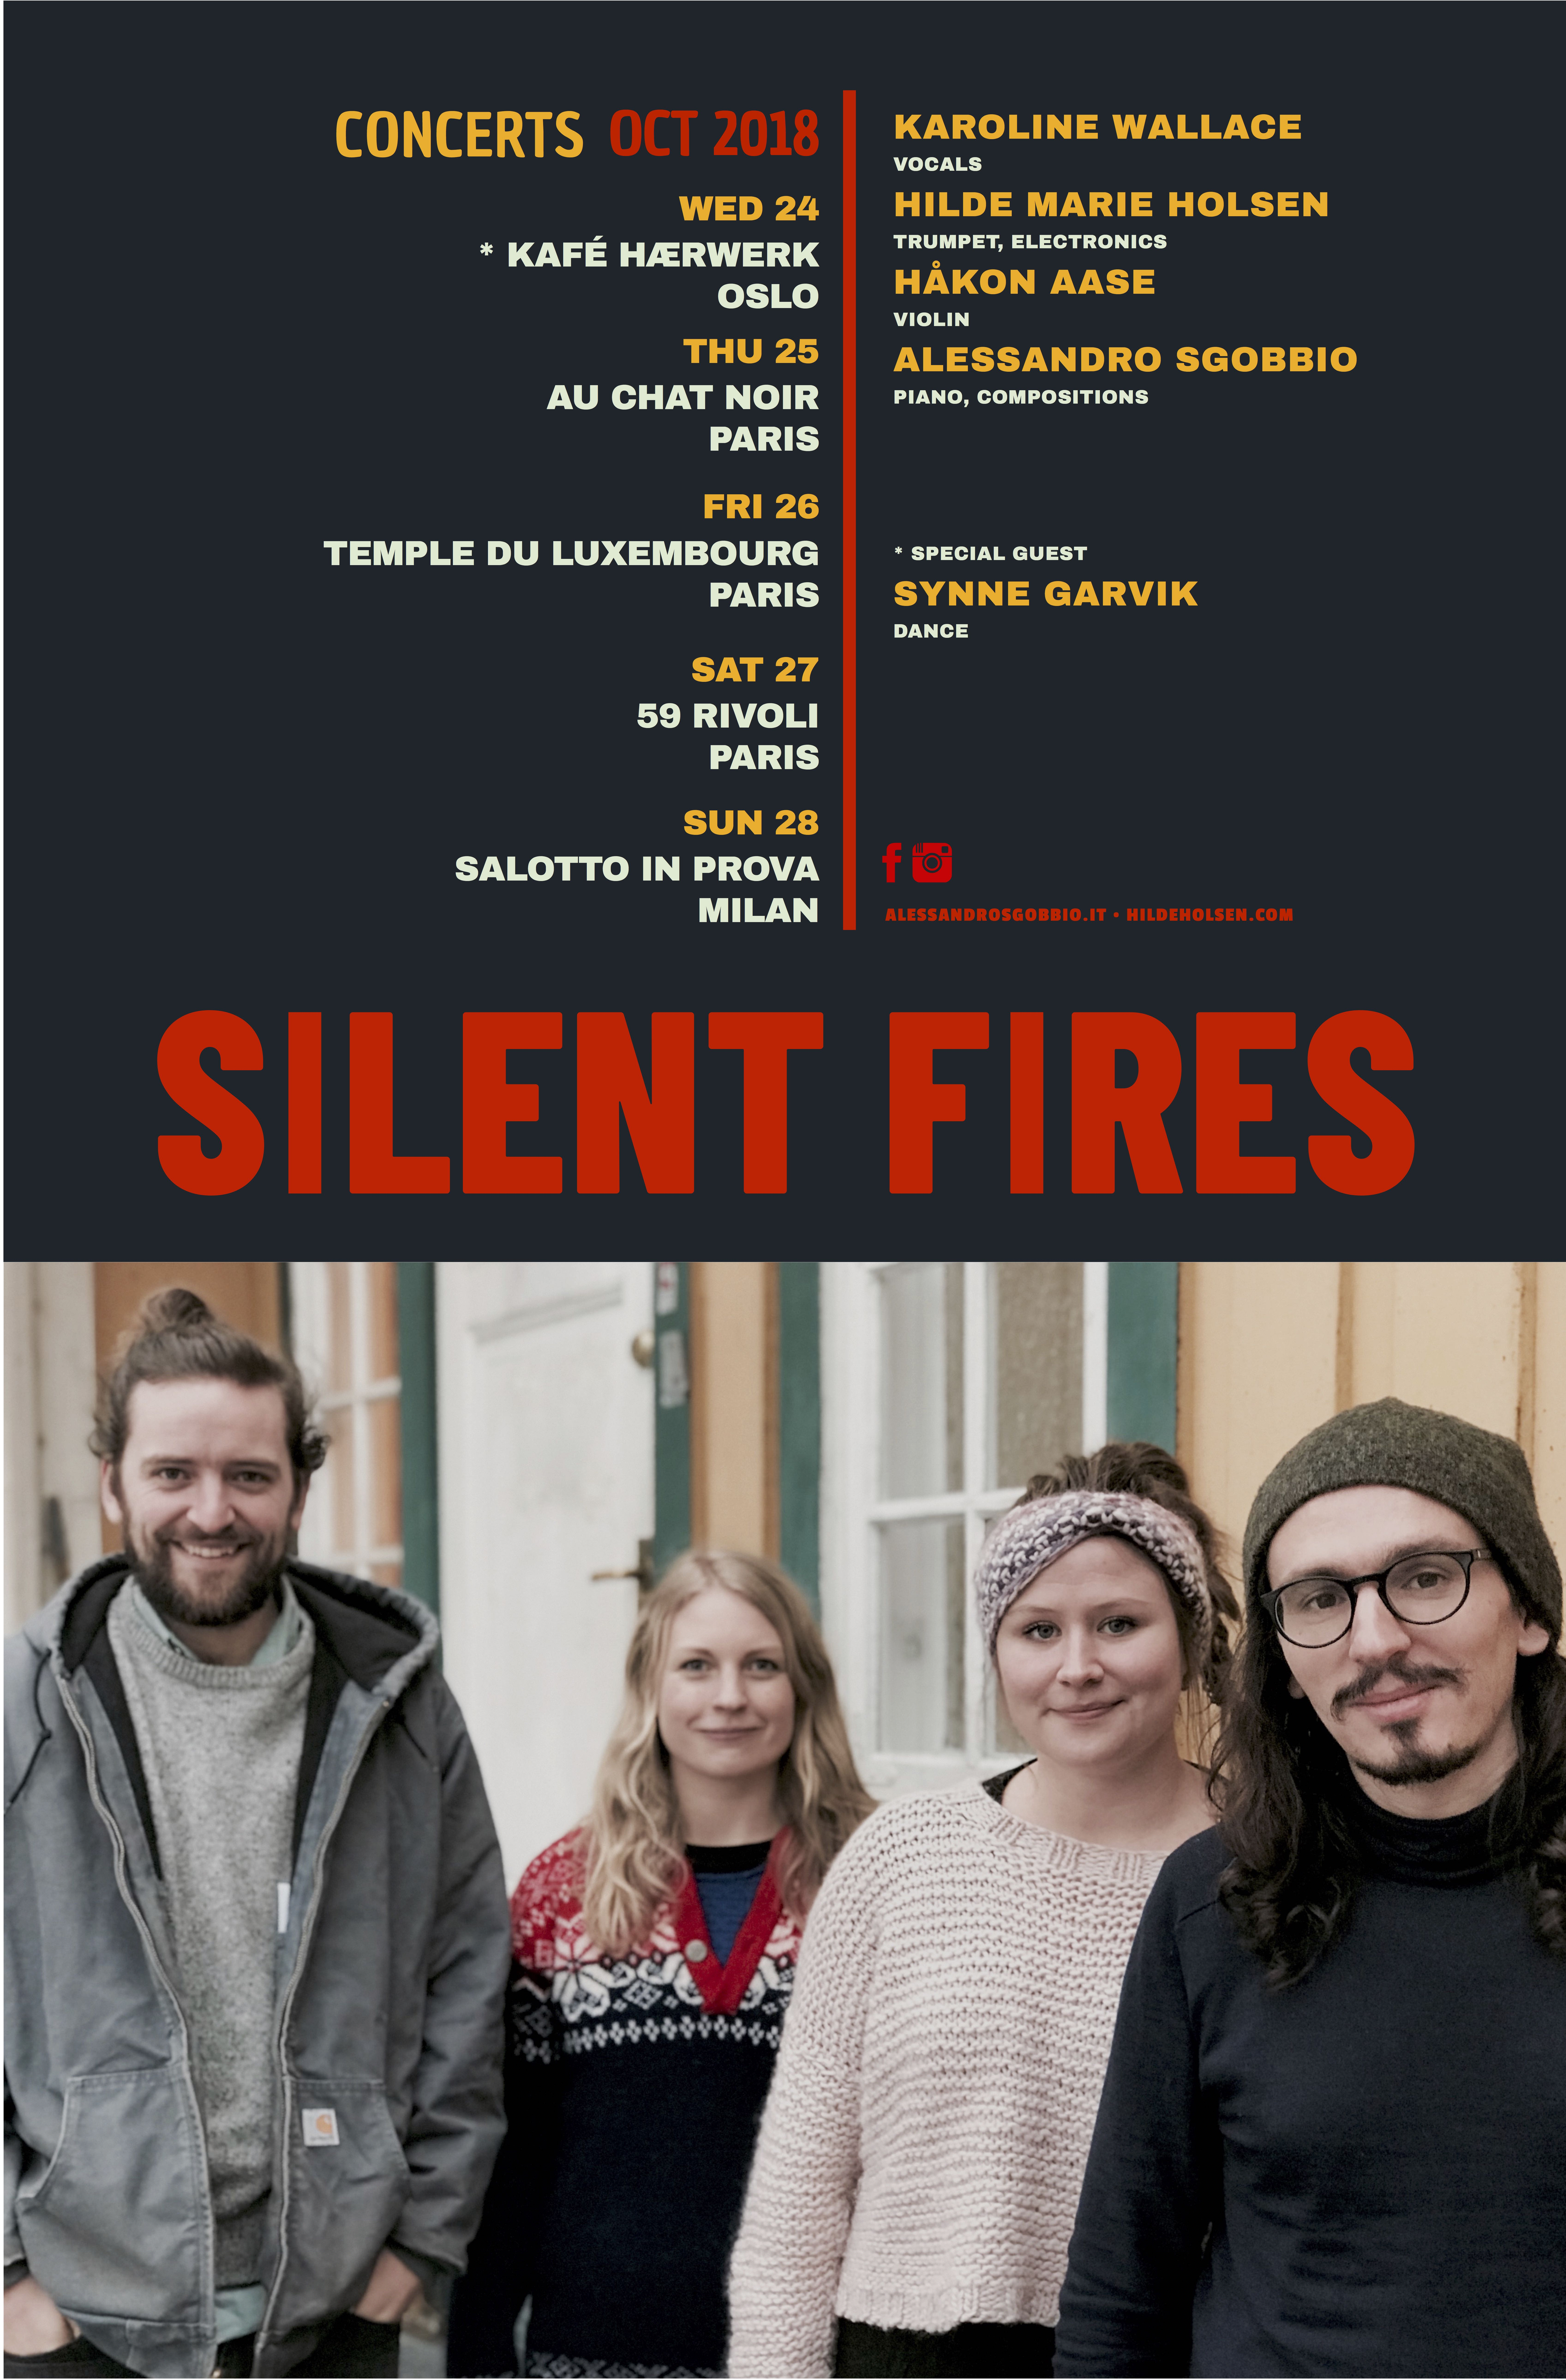 Silent Fires - October Tour 2018